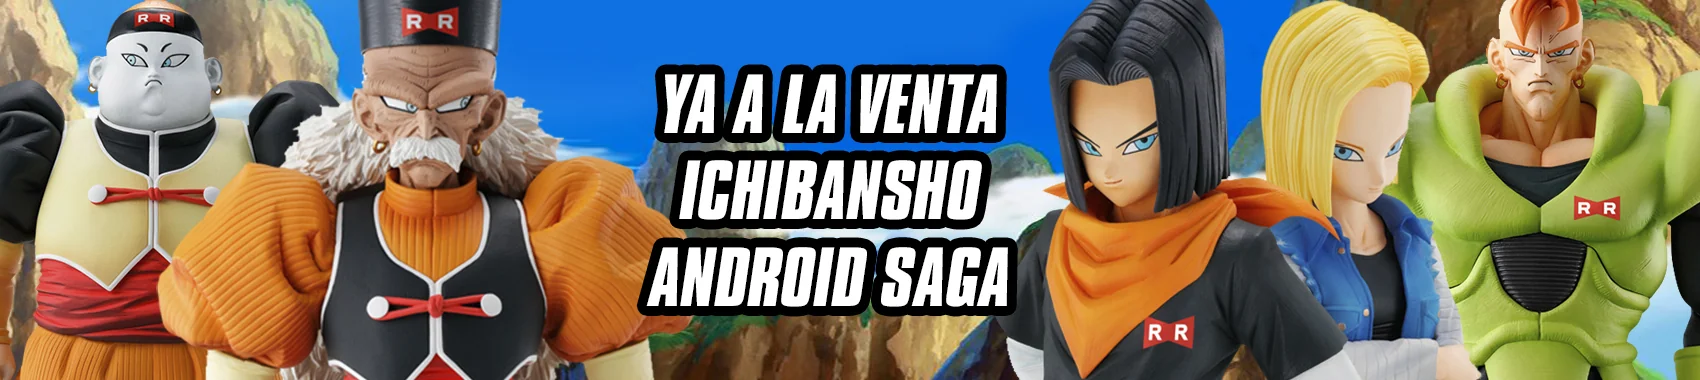 ichibansho saga androids